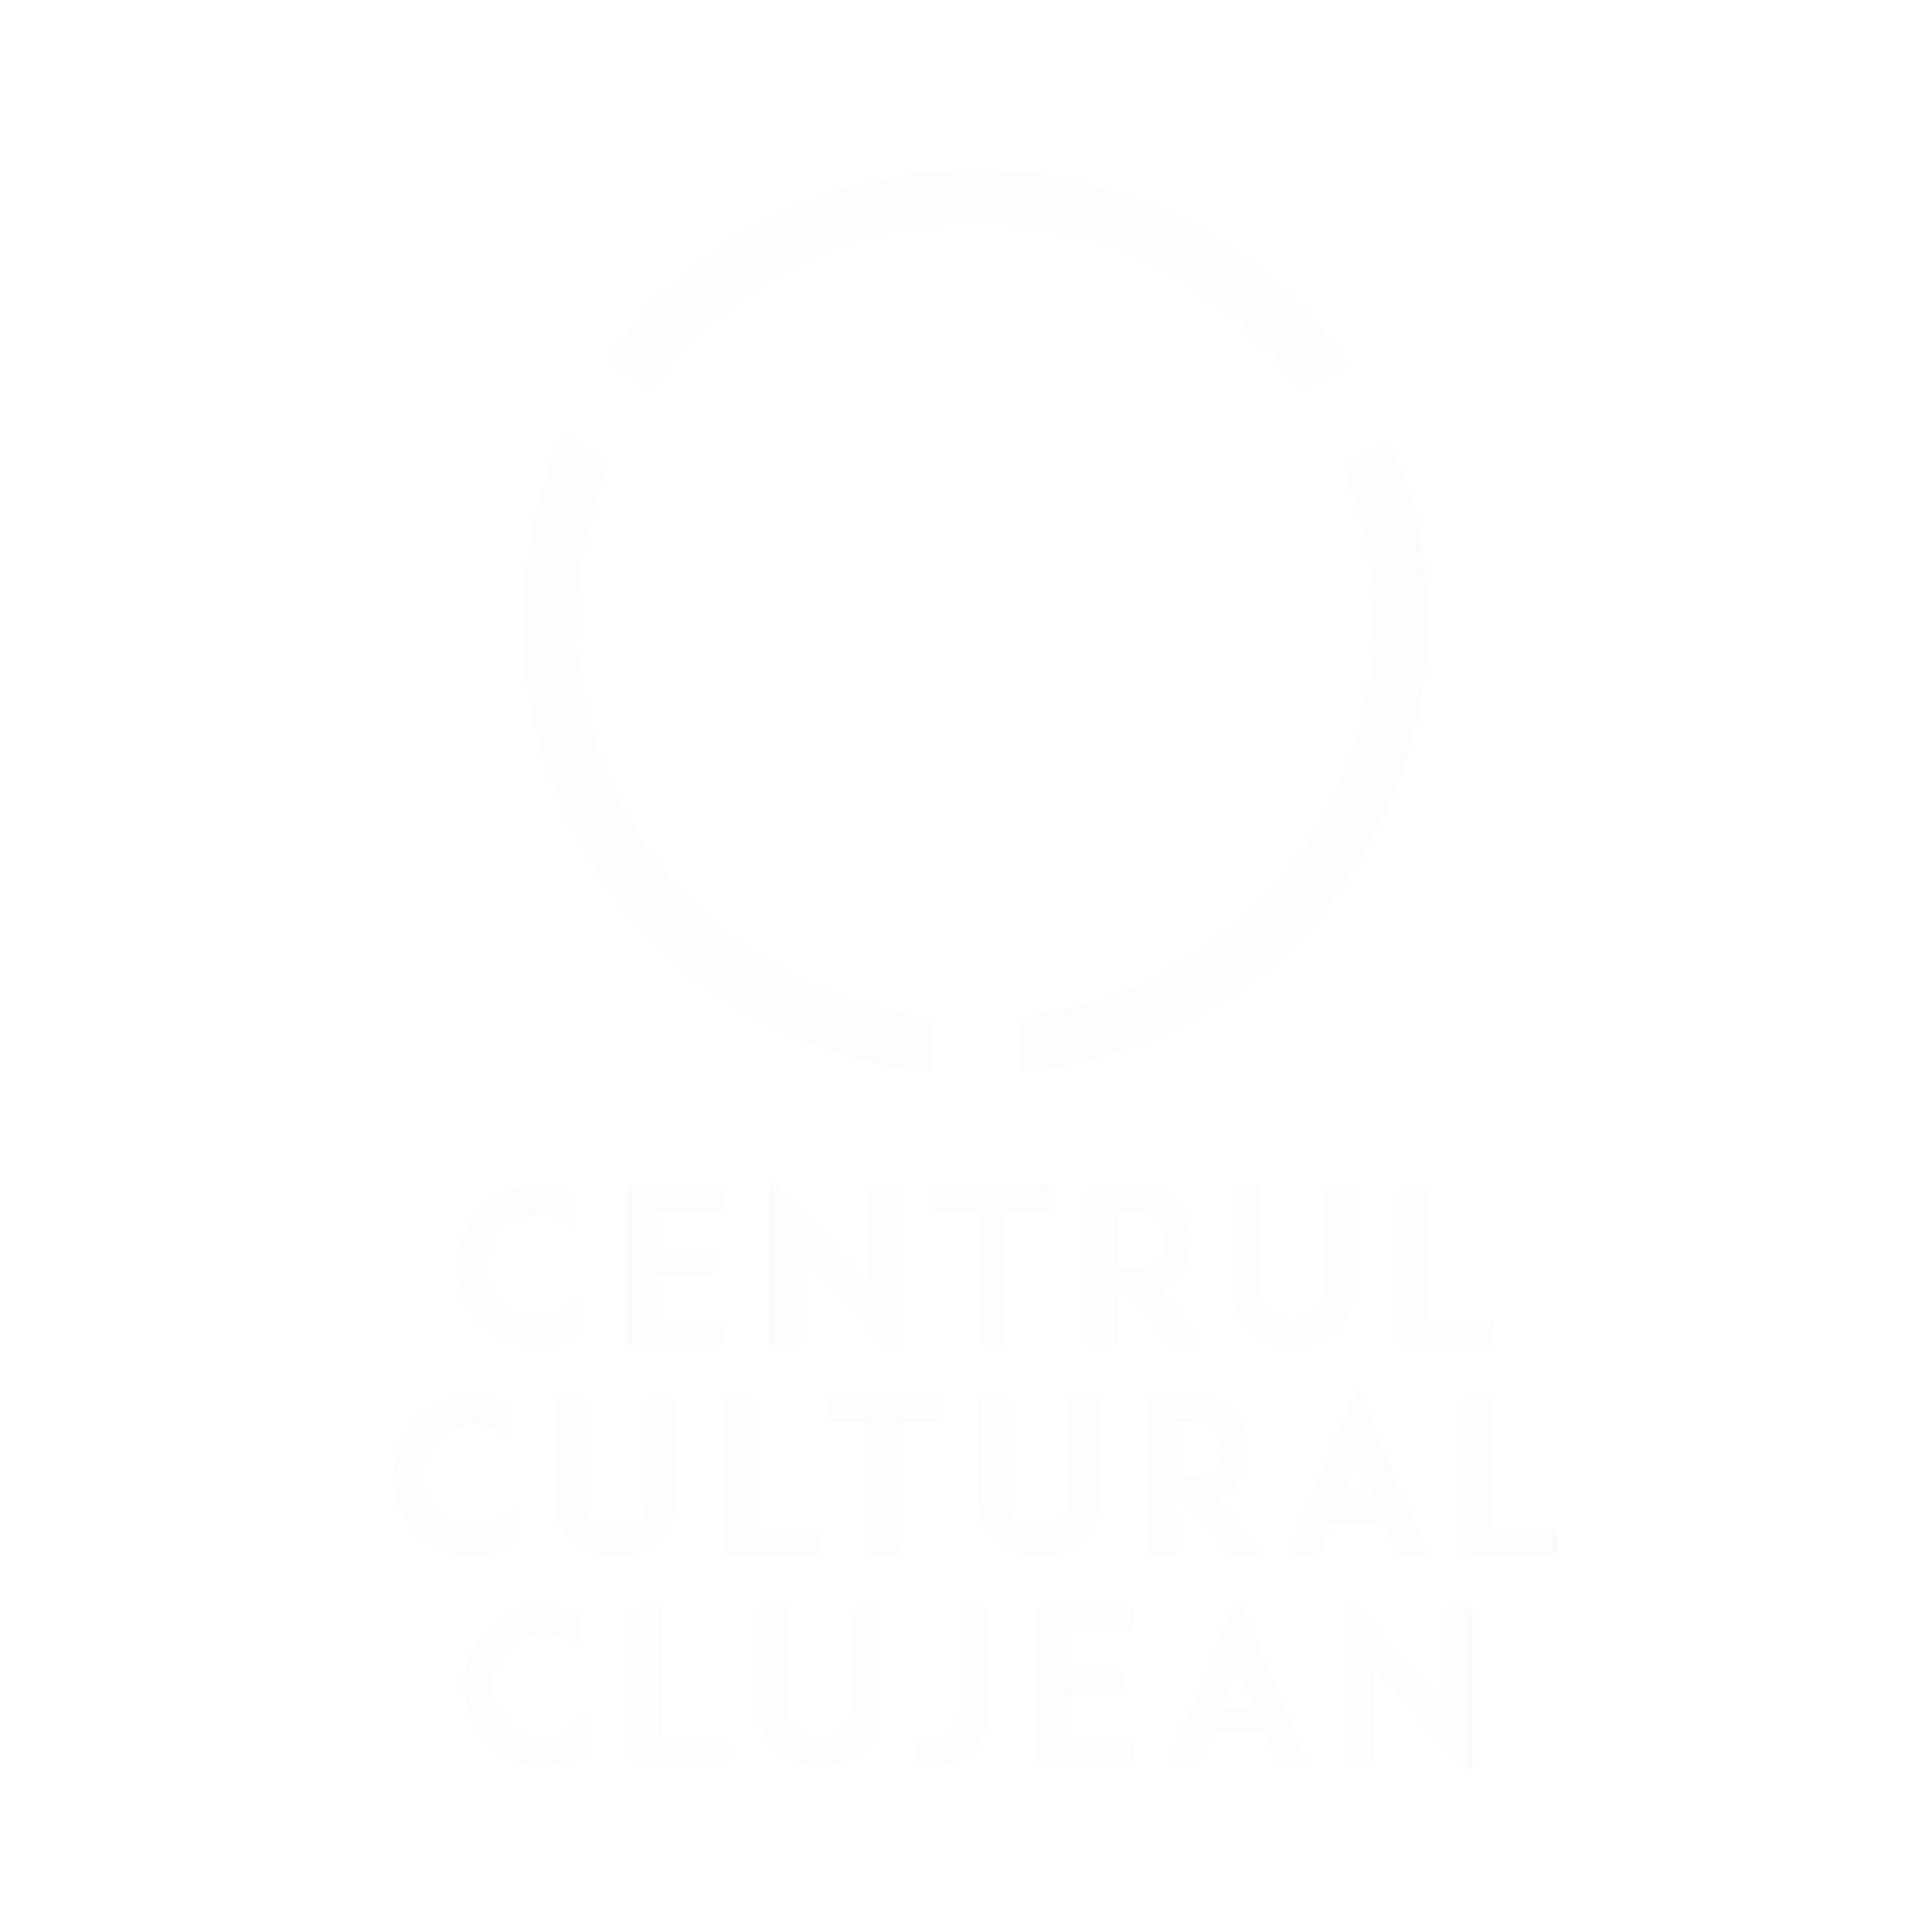 Centrul Cultural Clujean